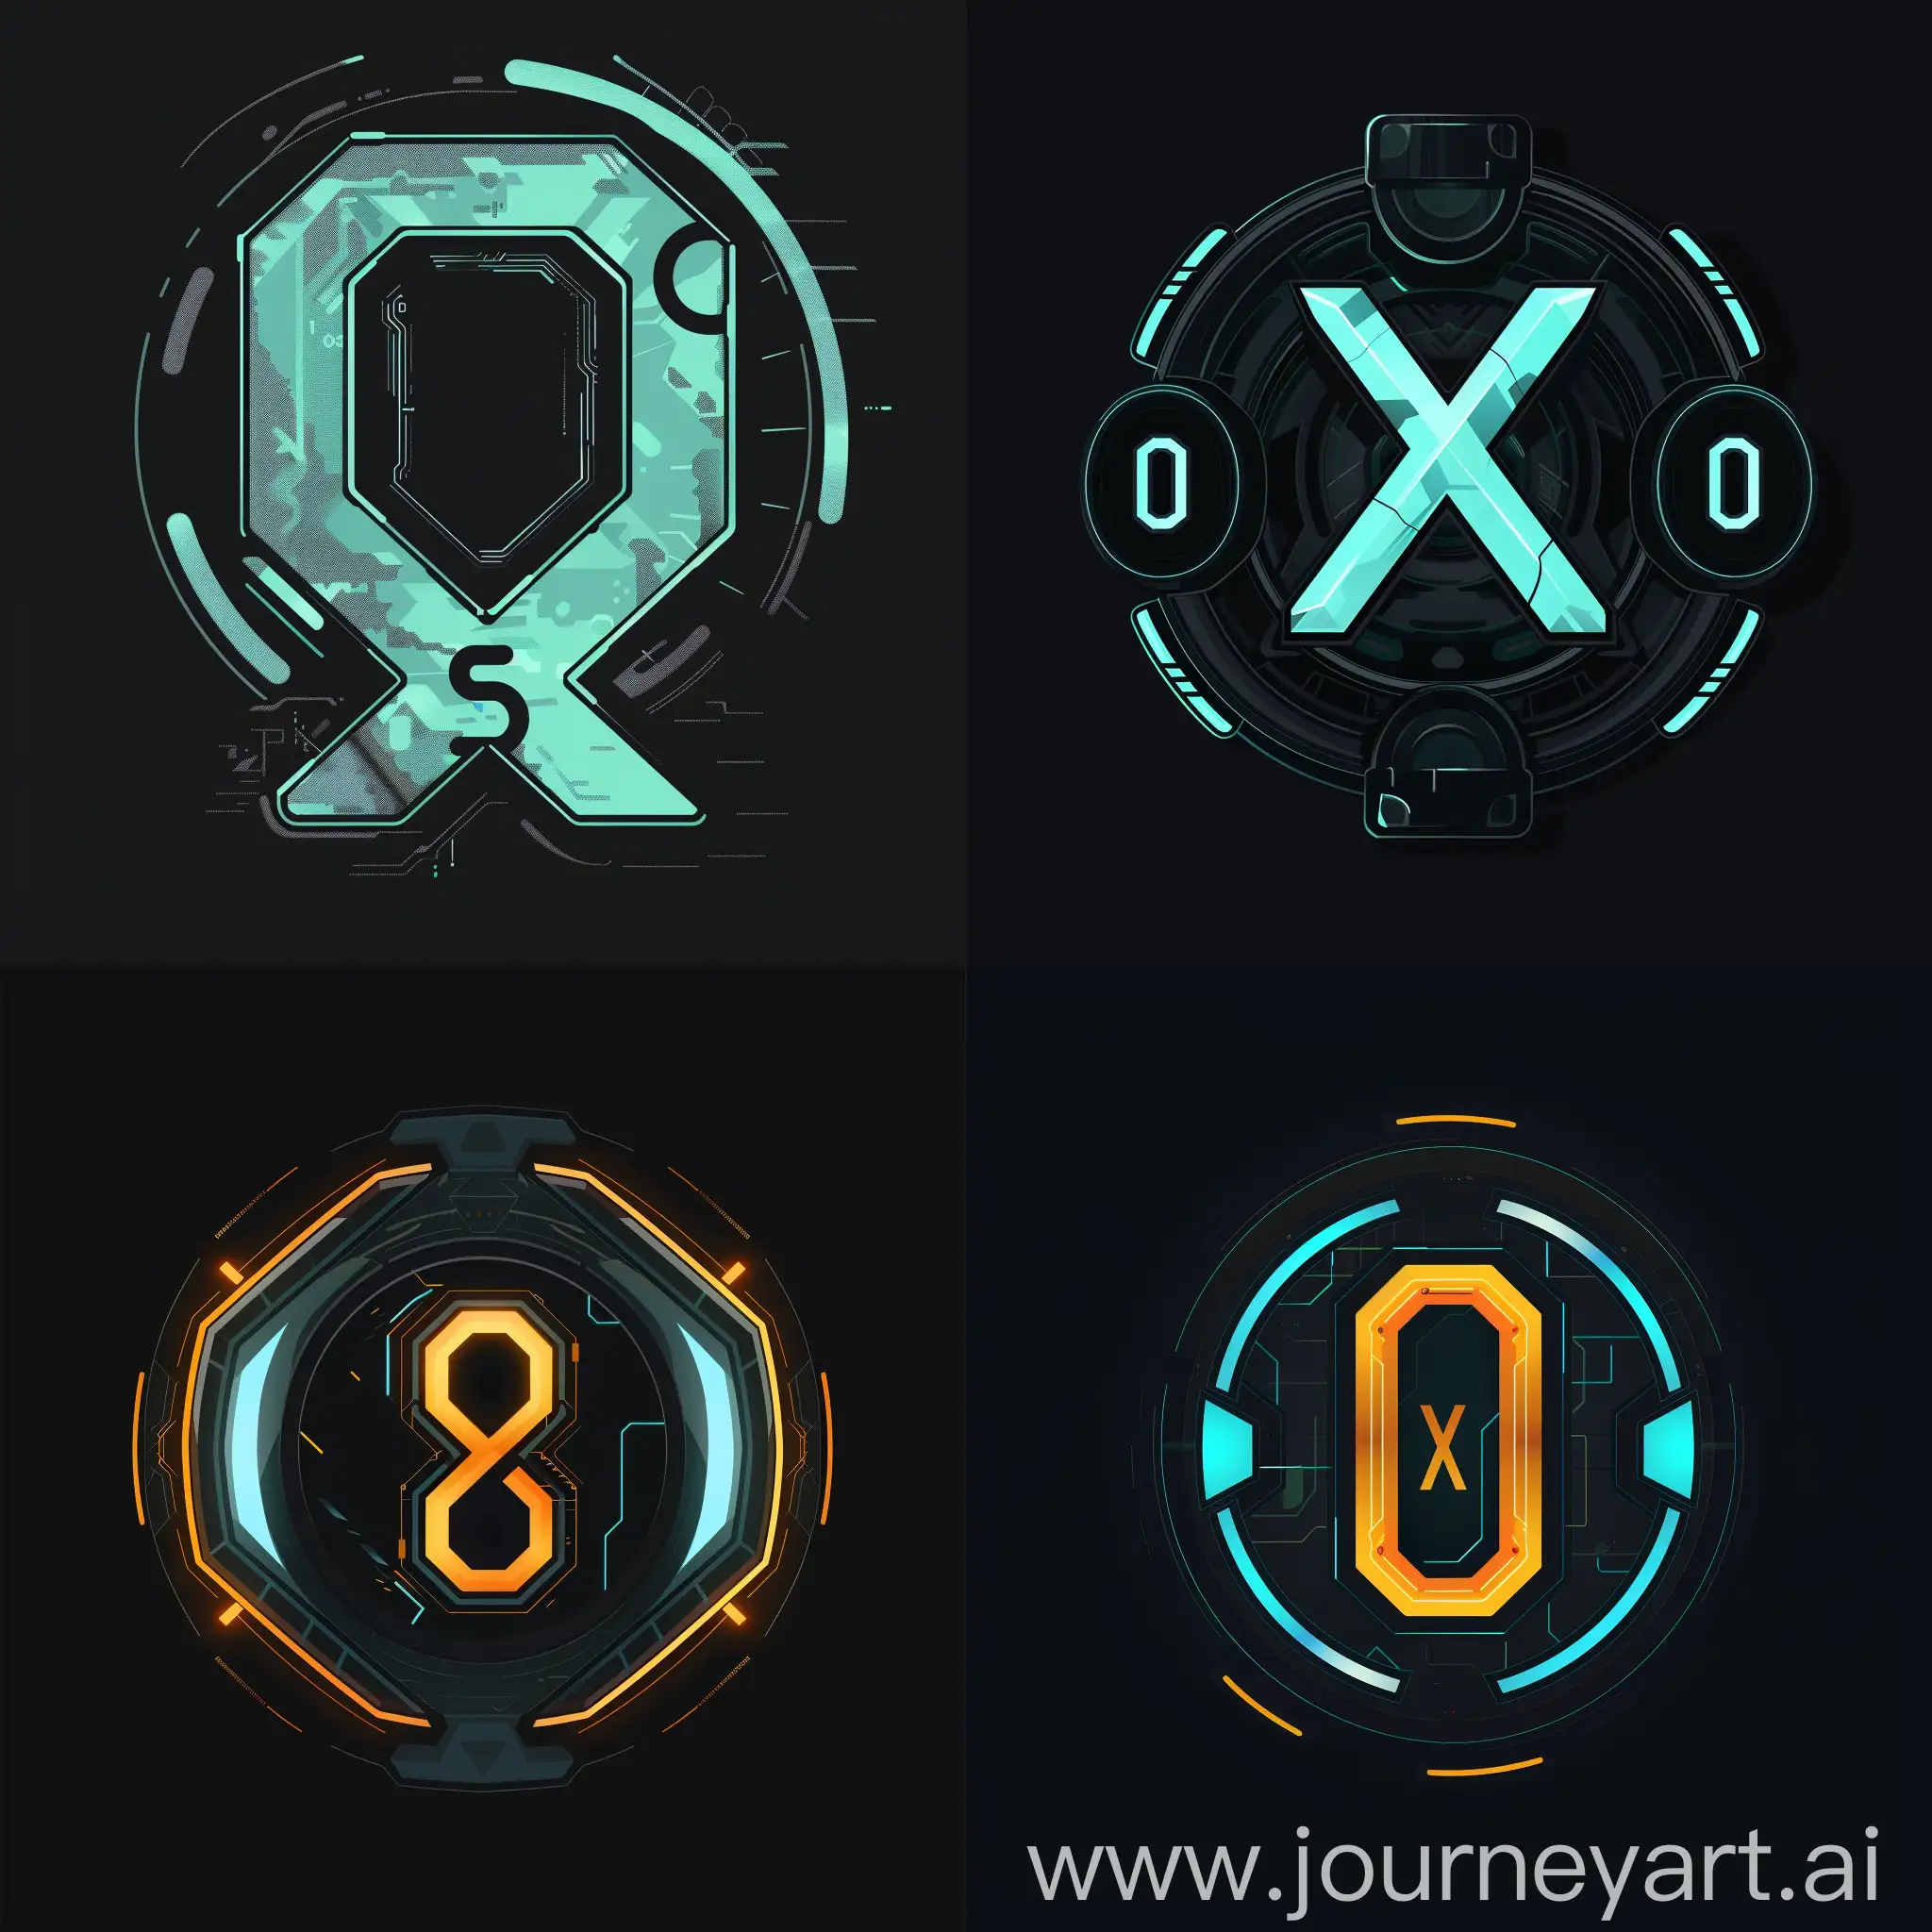 Futuristic-Blockchain-Game-Logo-0-and-X-in-Detailed-Clean-Design